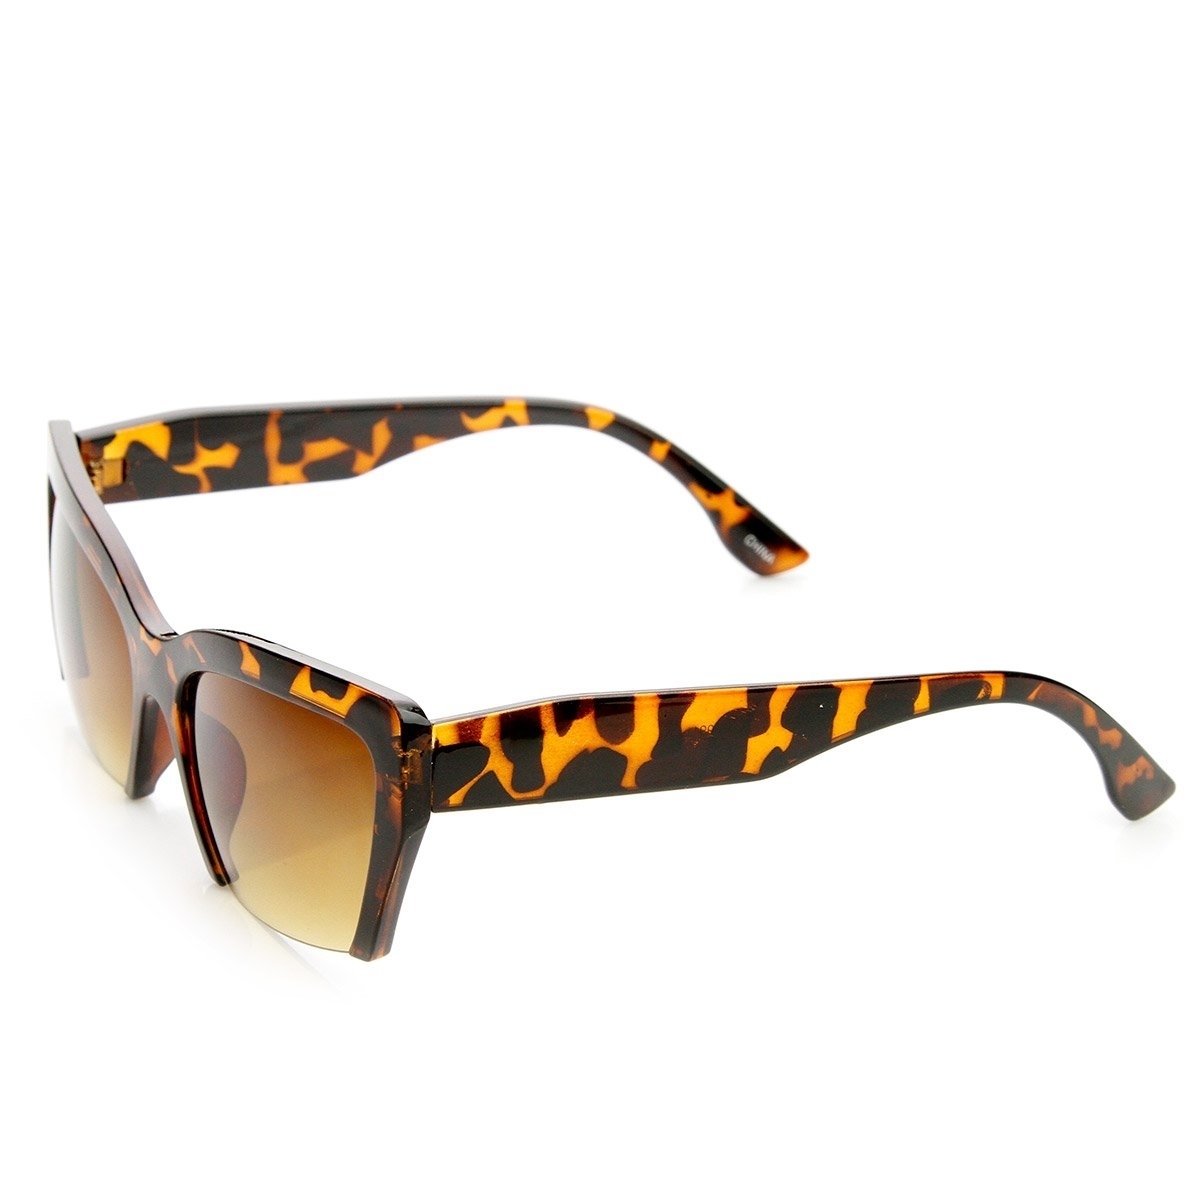 Womens Mod Fashion Semi-Rimless Cat Eye Sunglasses - Black Lavender